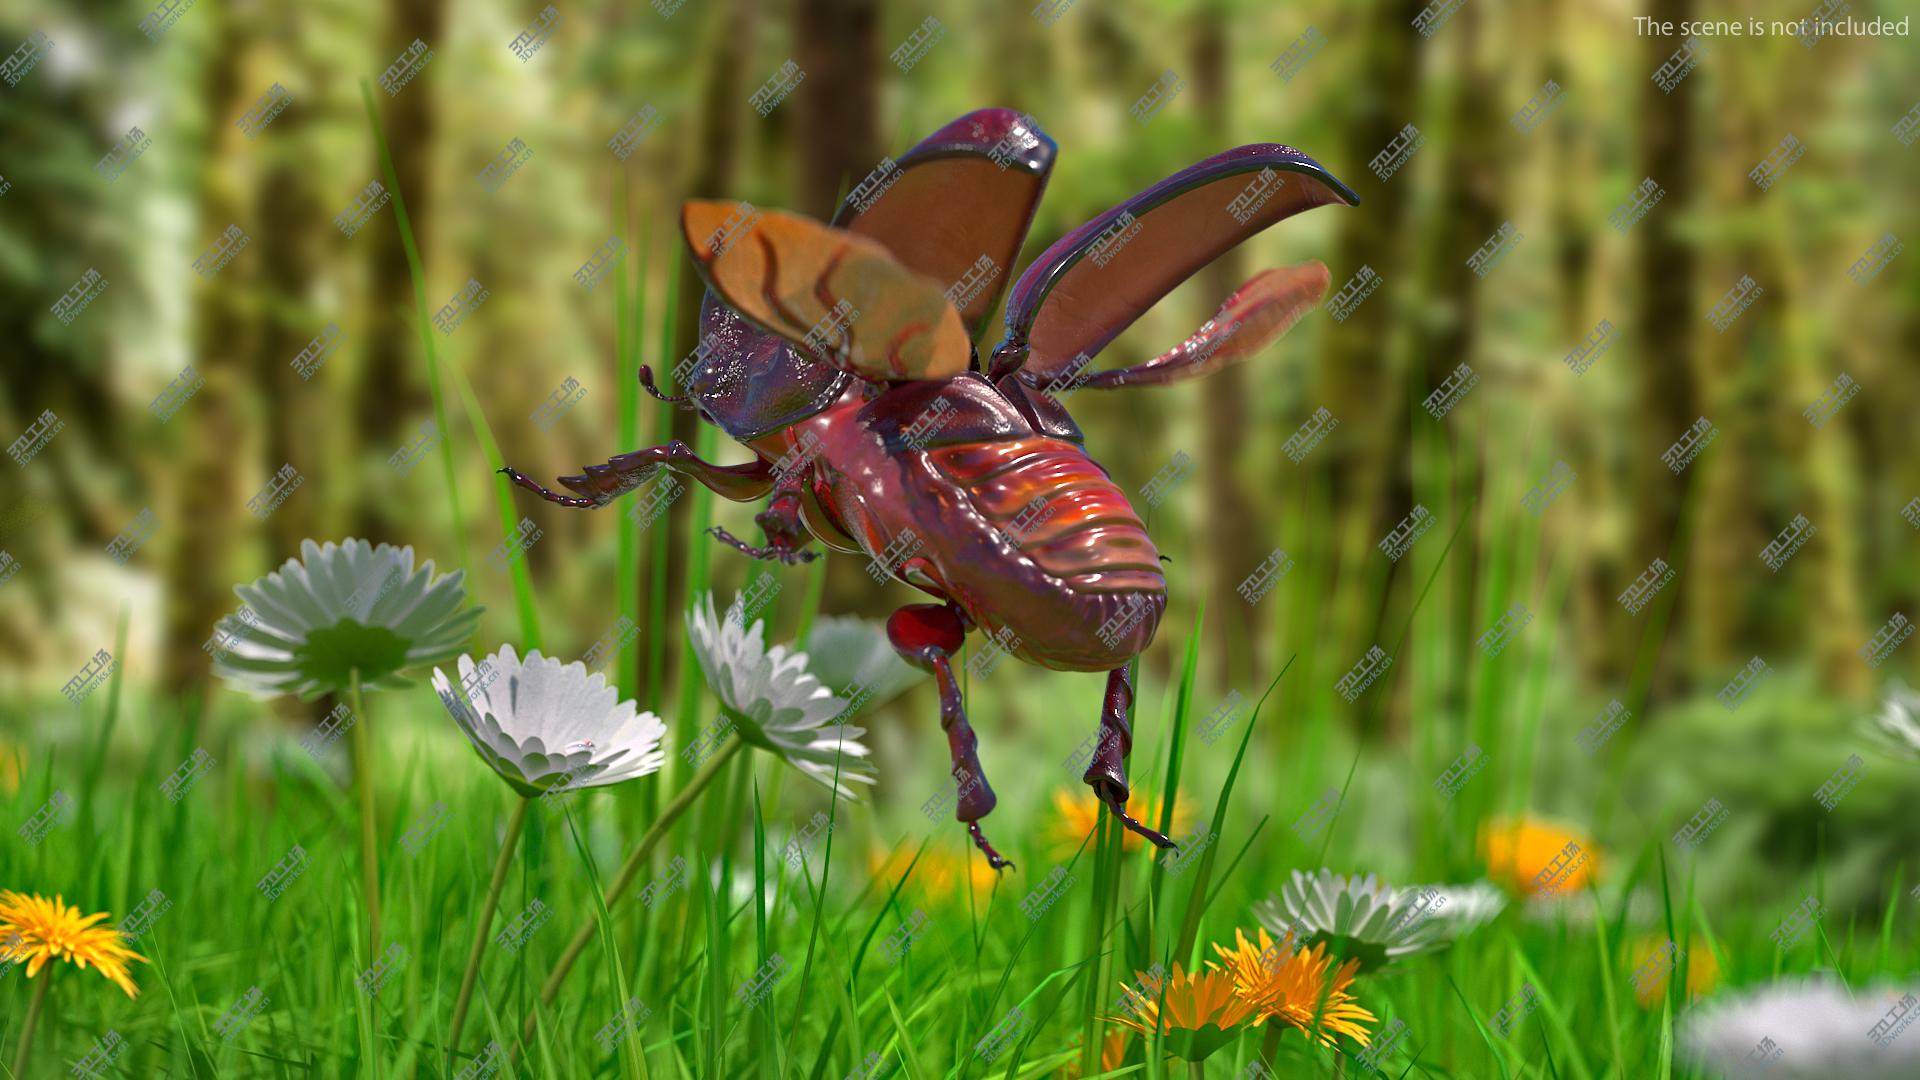 images/goods_img/202104093/Rhinoceros Beetle Oryctes Nasicornis Flying 3D model/4.jpg